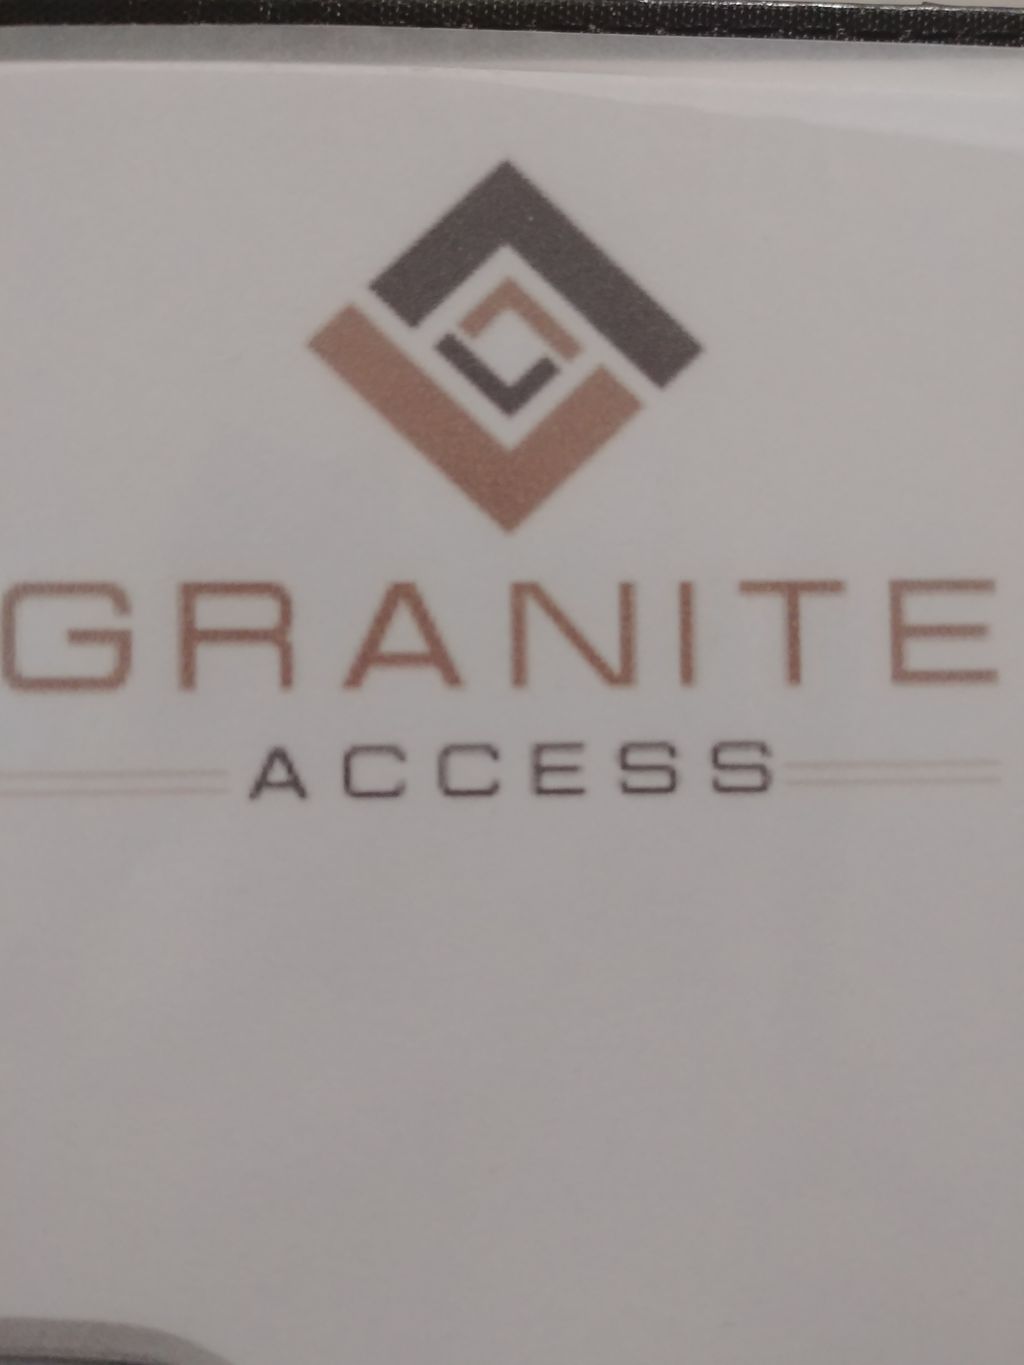 Granite Access